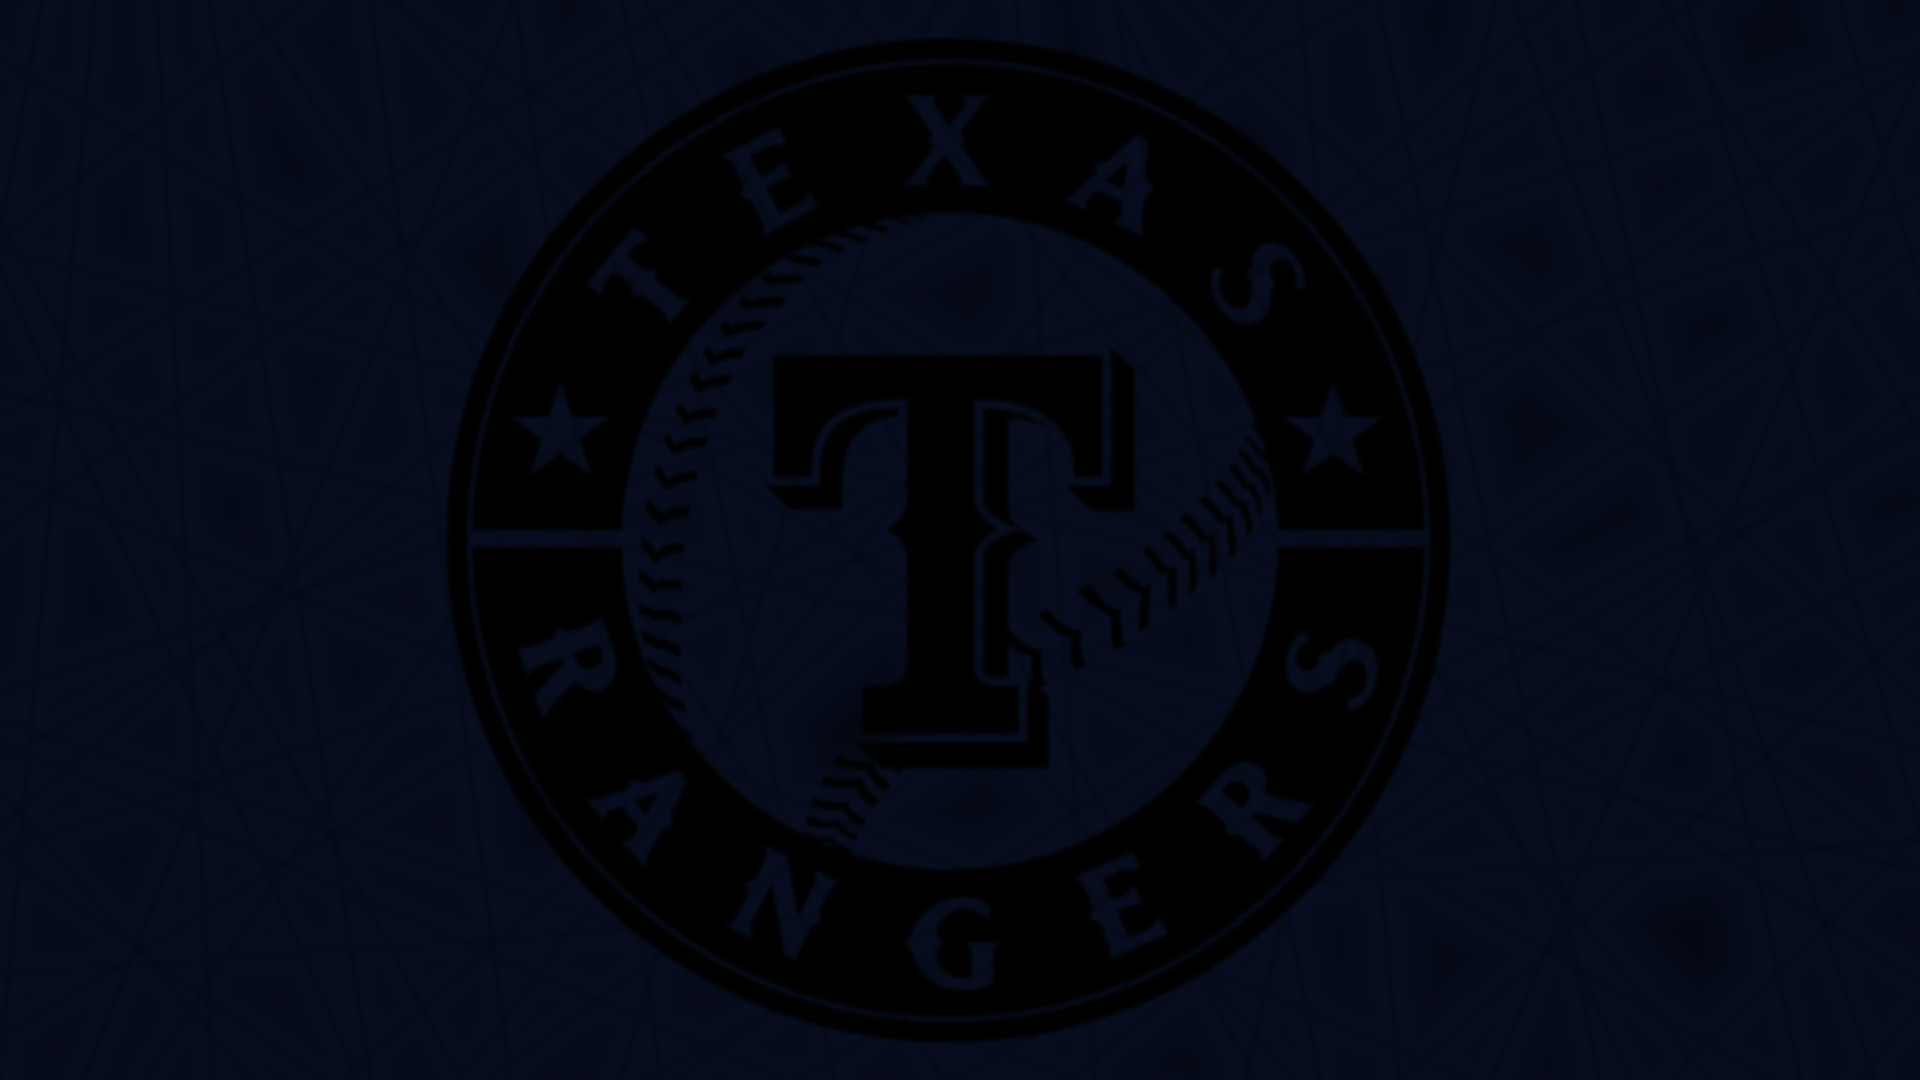 1920x1080 ... Free Download Texas Rangers Wallpaper | Wallpaper Gallery ...